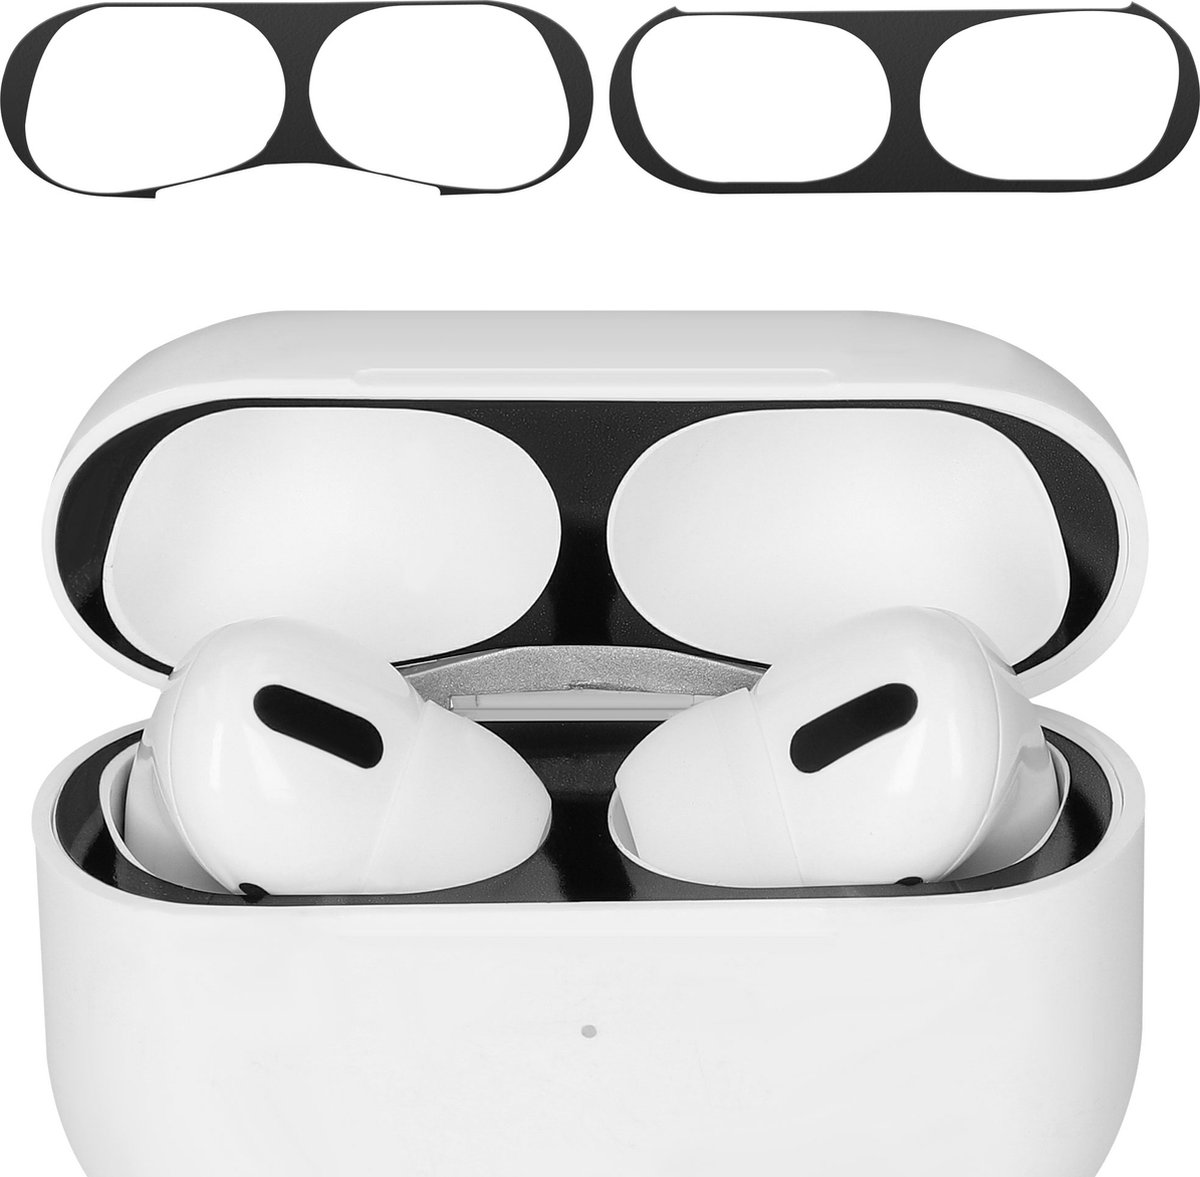 kwmobile anti-stof sticker voor Apple Airpods Pro 2 - Stofbeschermer in zwart